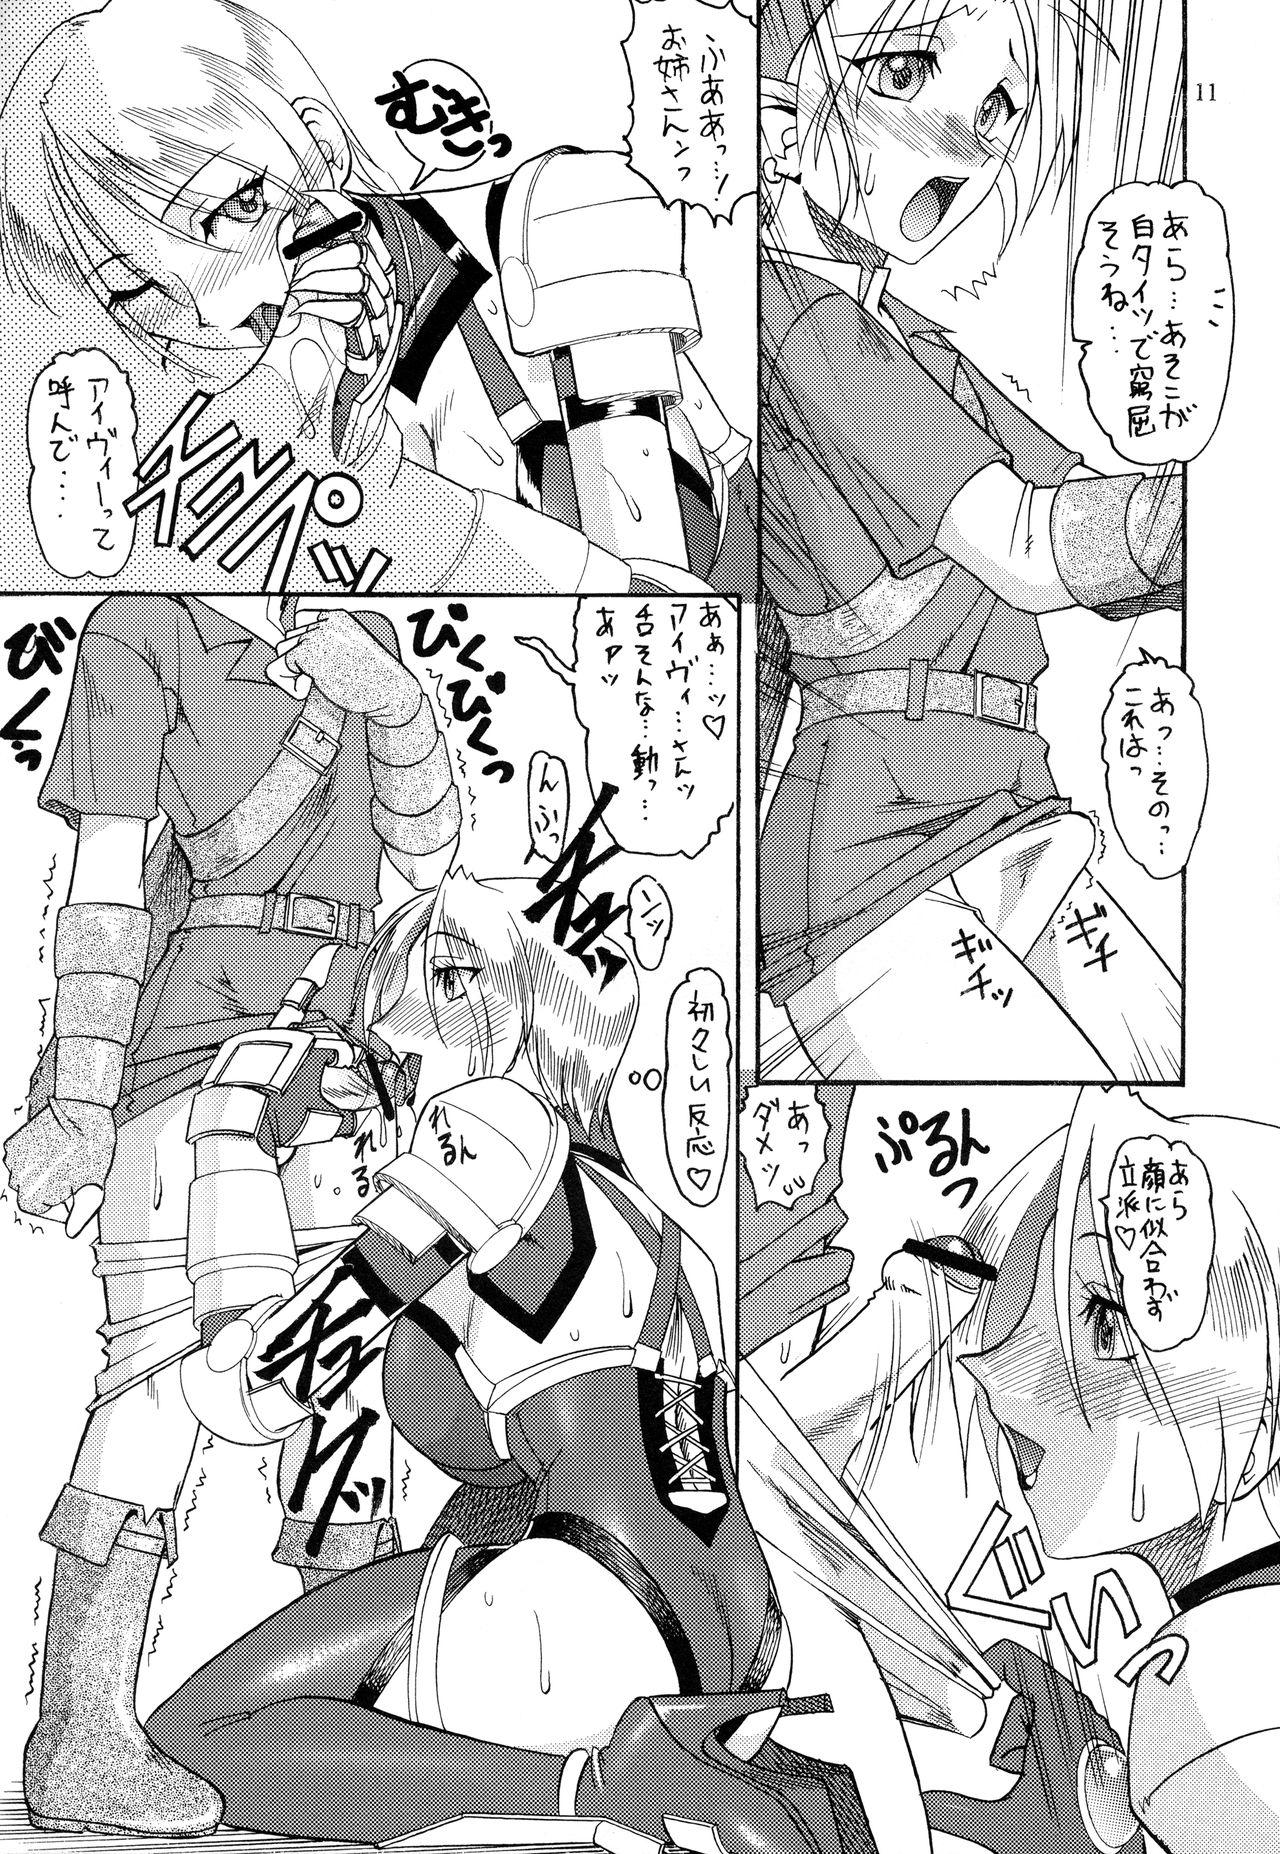 Bubblebutt SEMEDAIN G WORKS Vol. 20 - Ichisan - Soulcalibur Fantasy Massage - Page 10